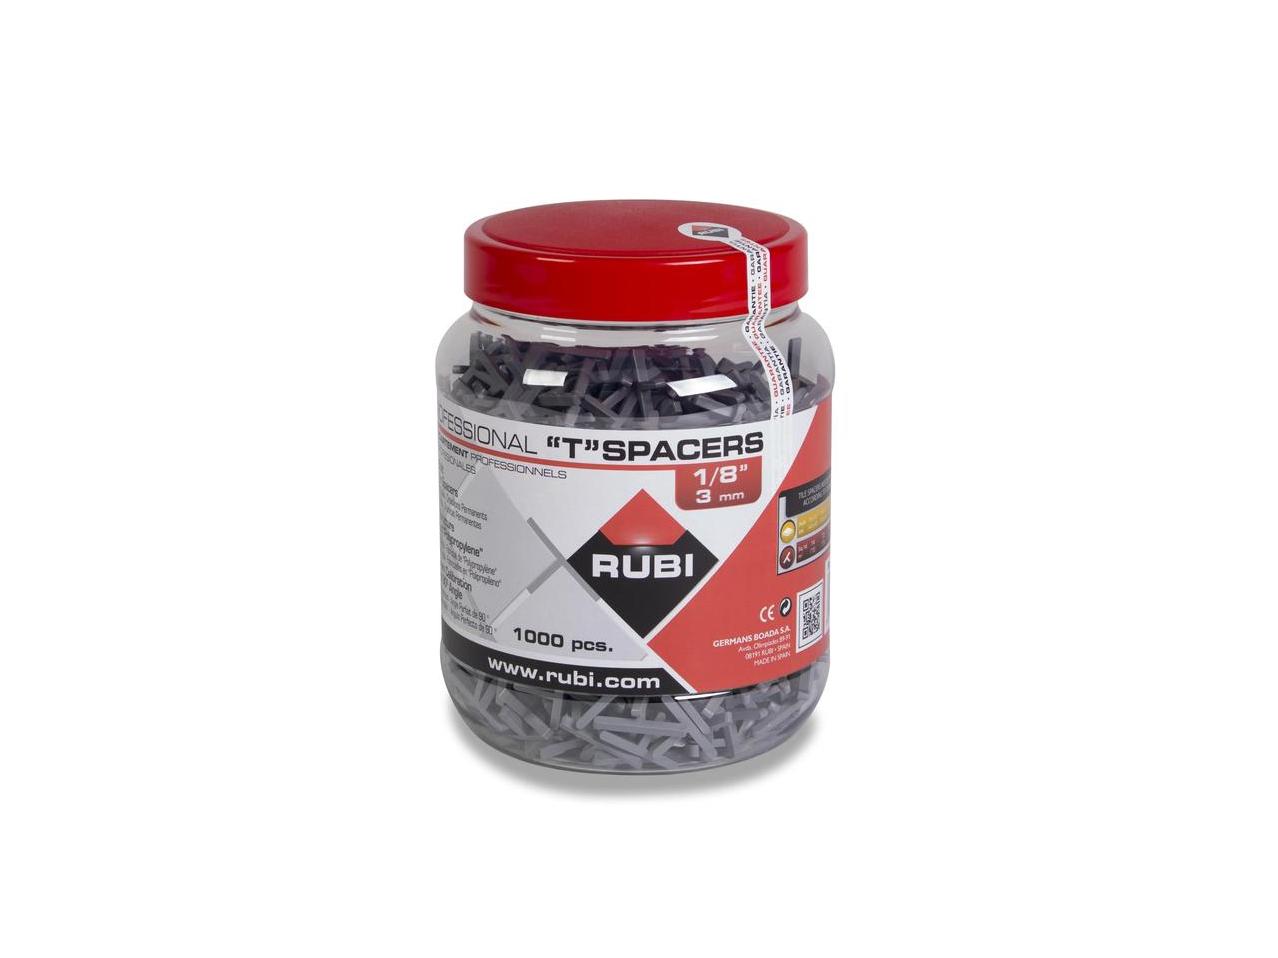 Rubi (2399) product